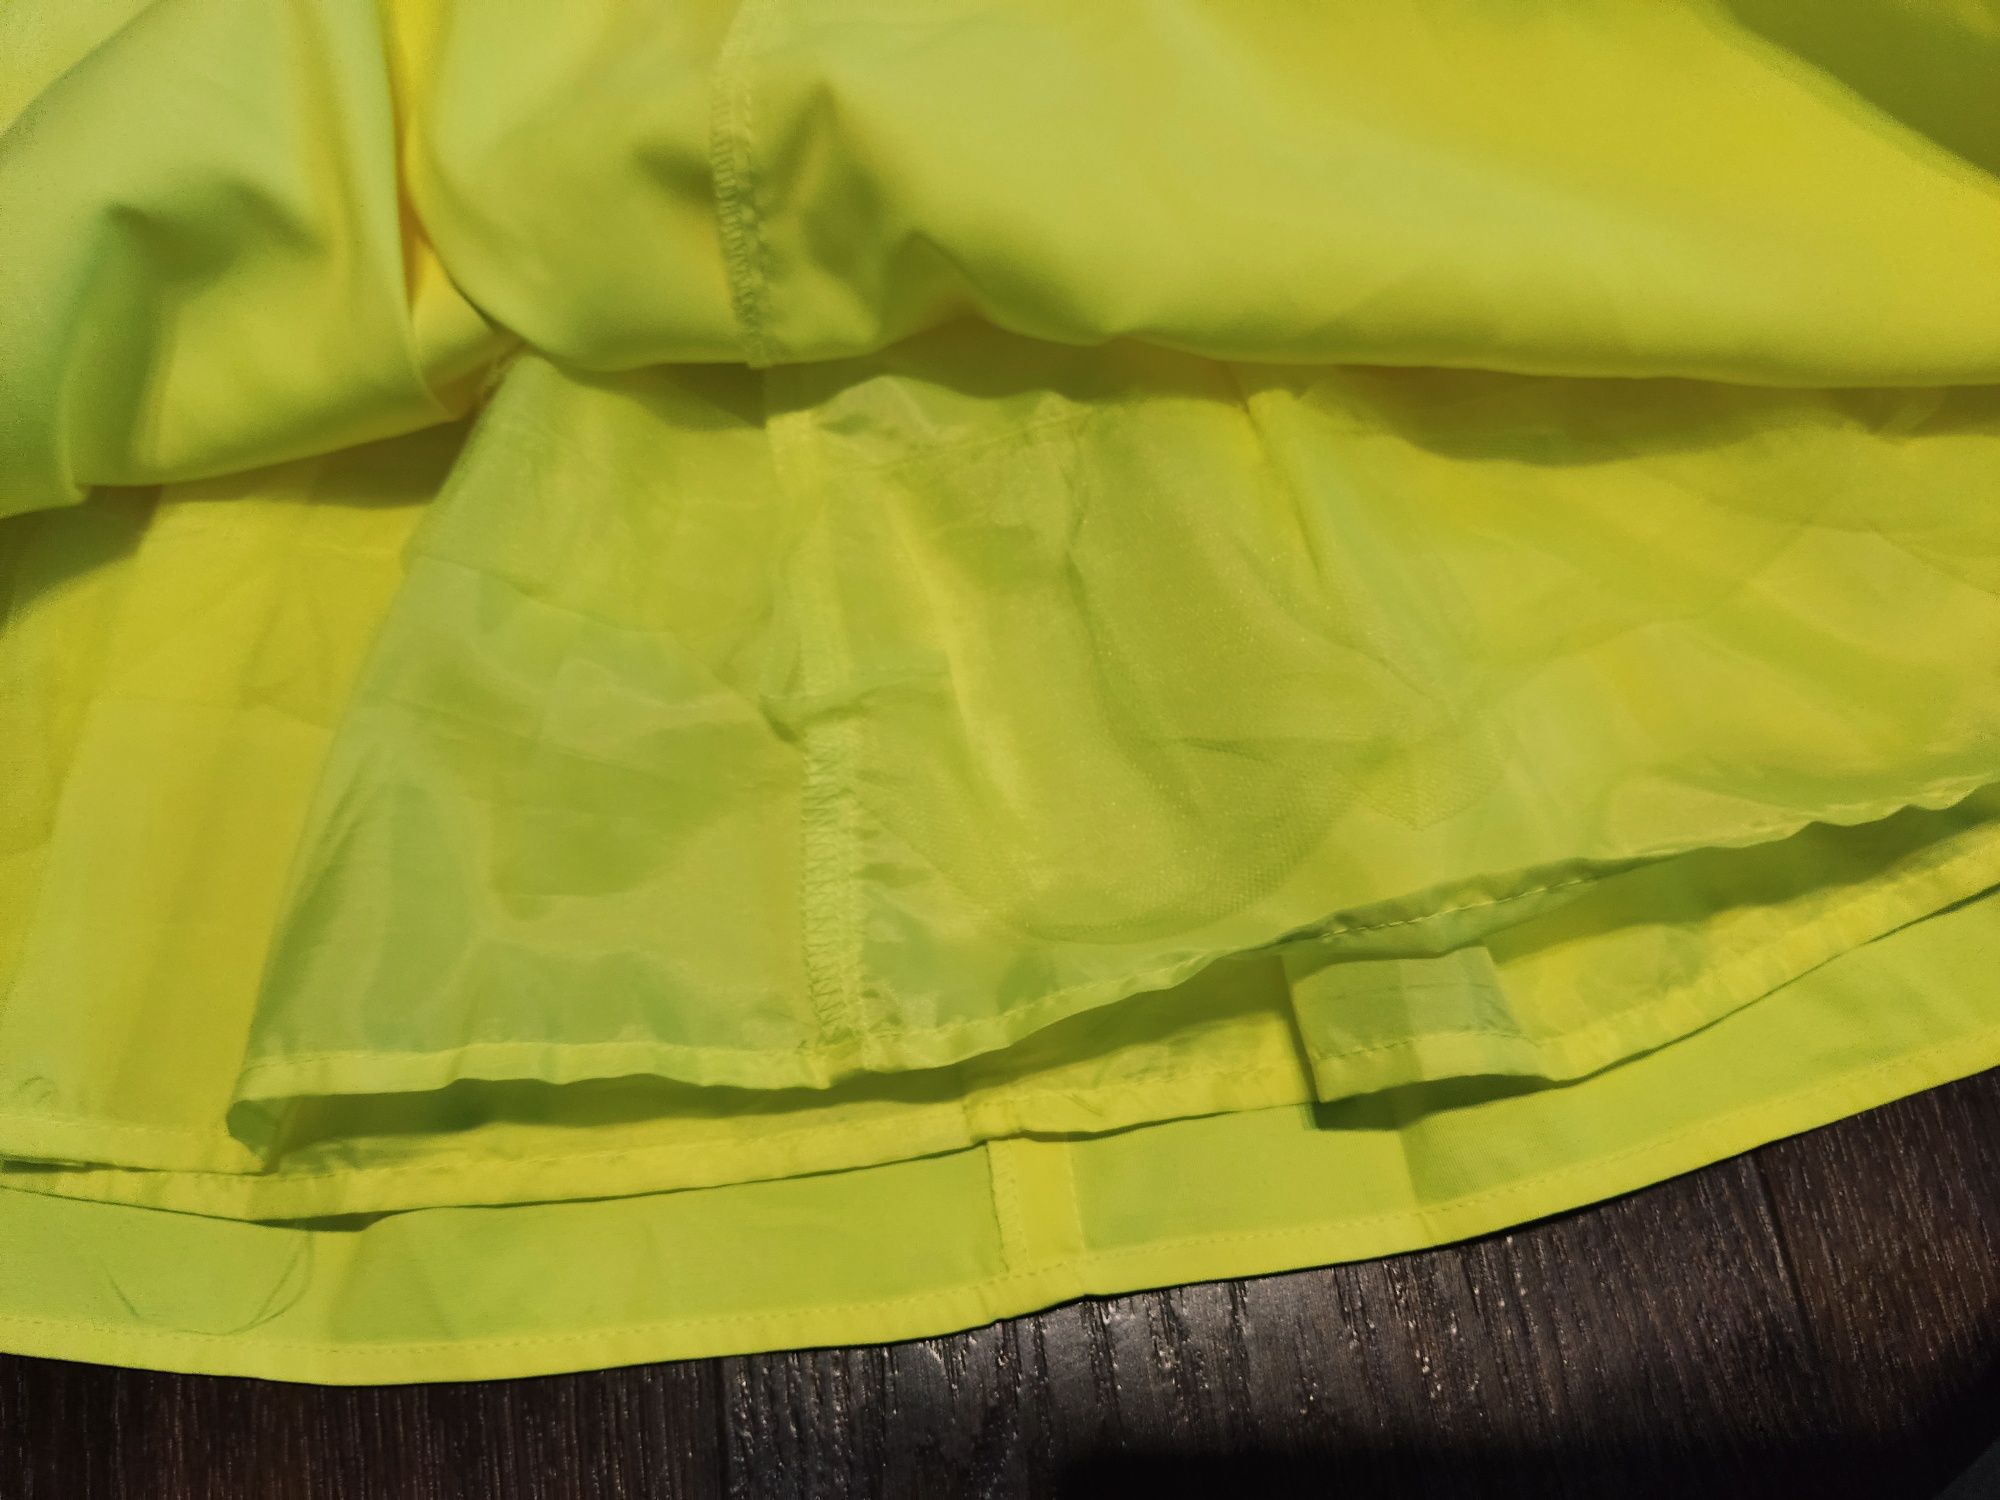 Żółta spódnica Sinsay XL